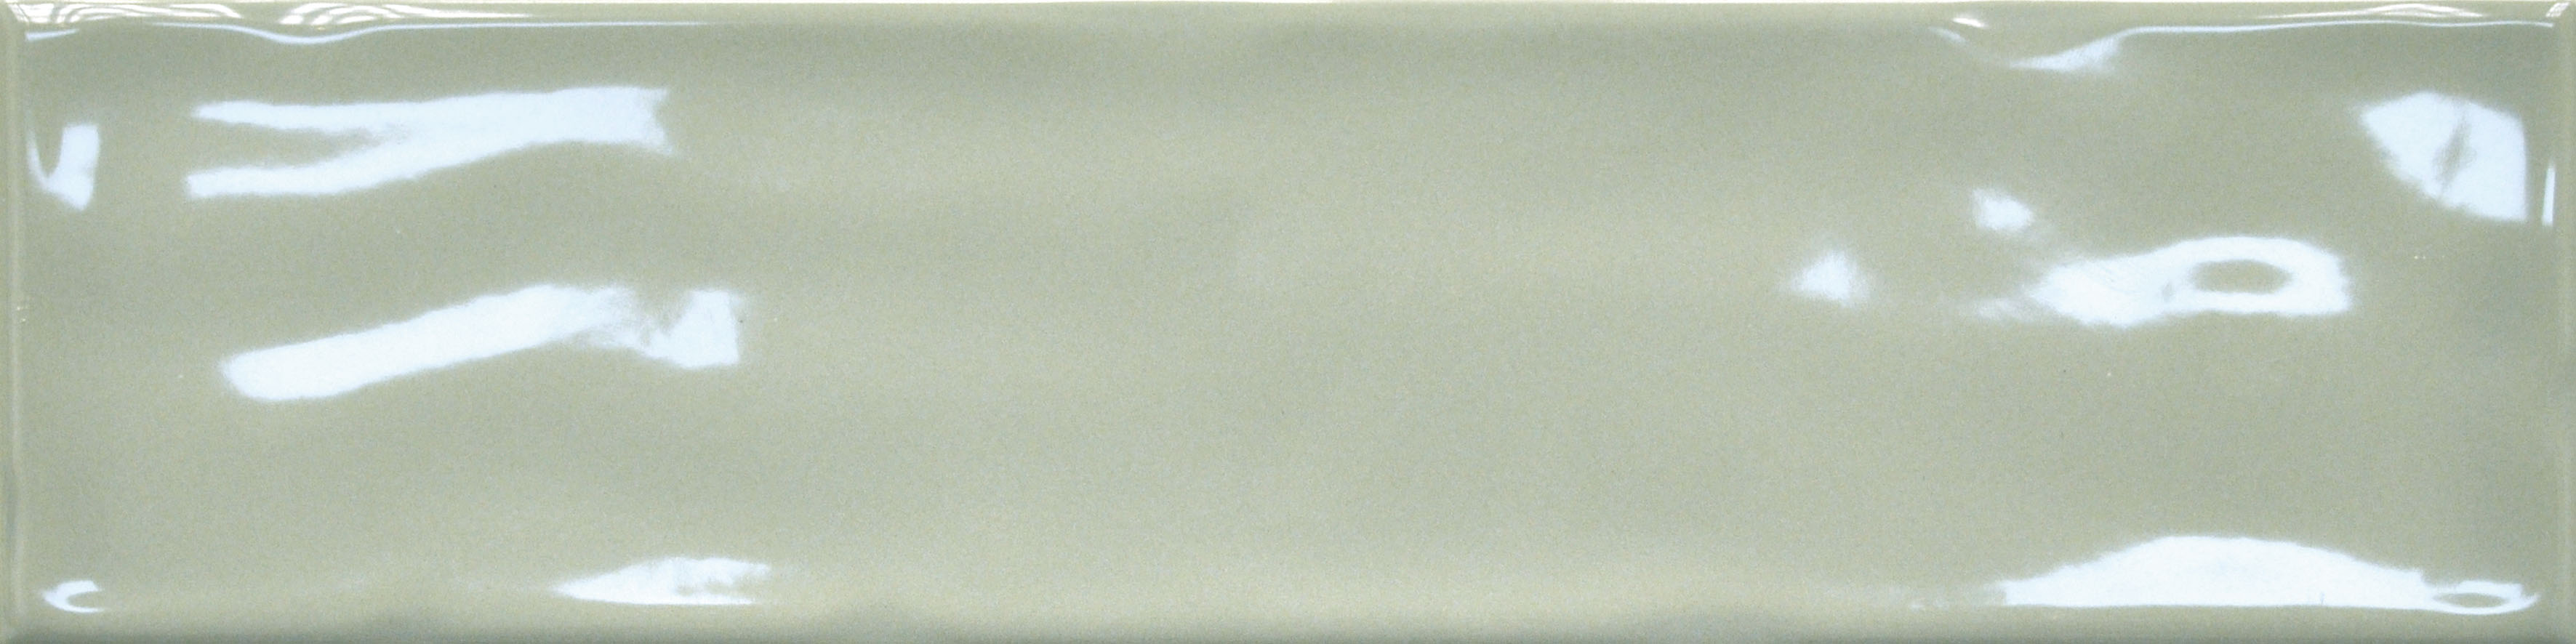 Catalea Gres Tälberg Metrofliesen Hellgrün glänzend 7,5x30 cm 